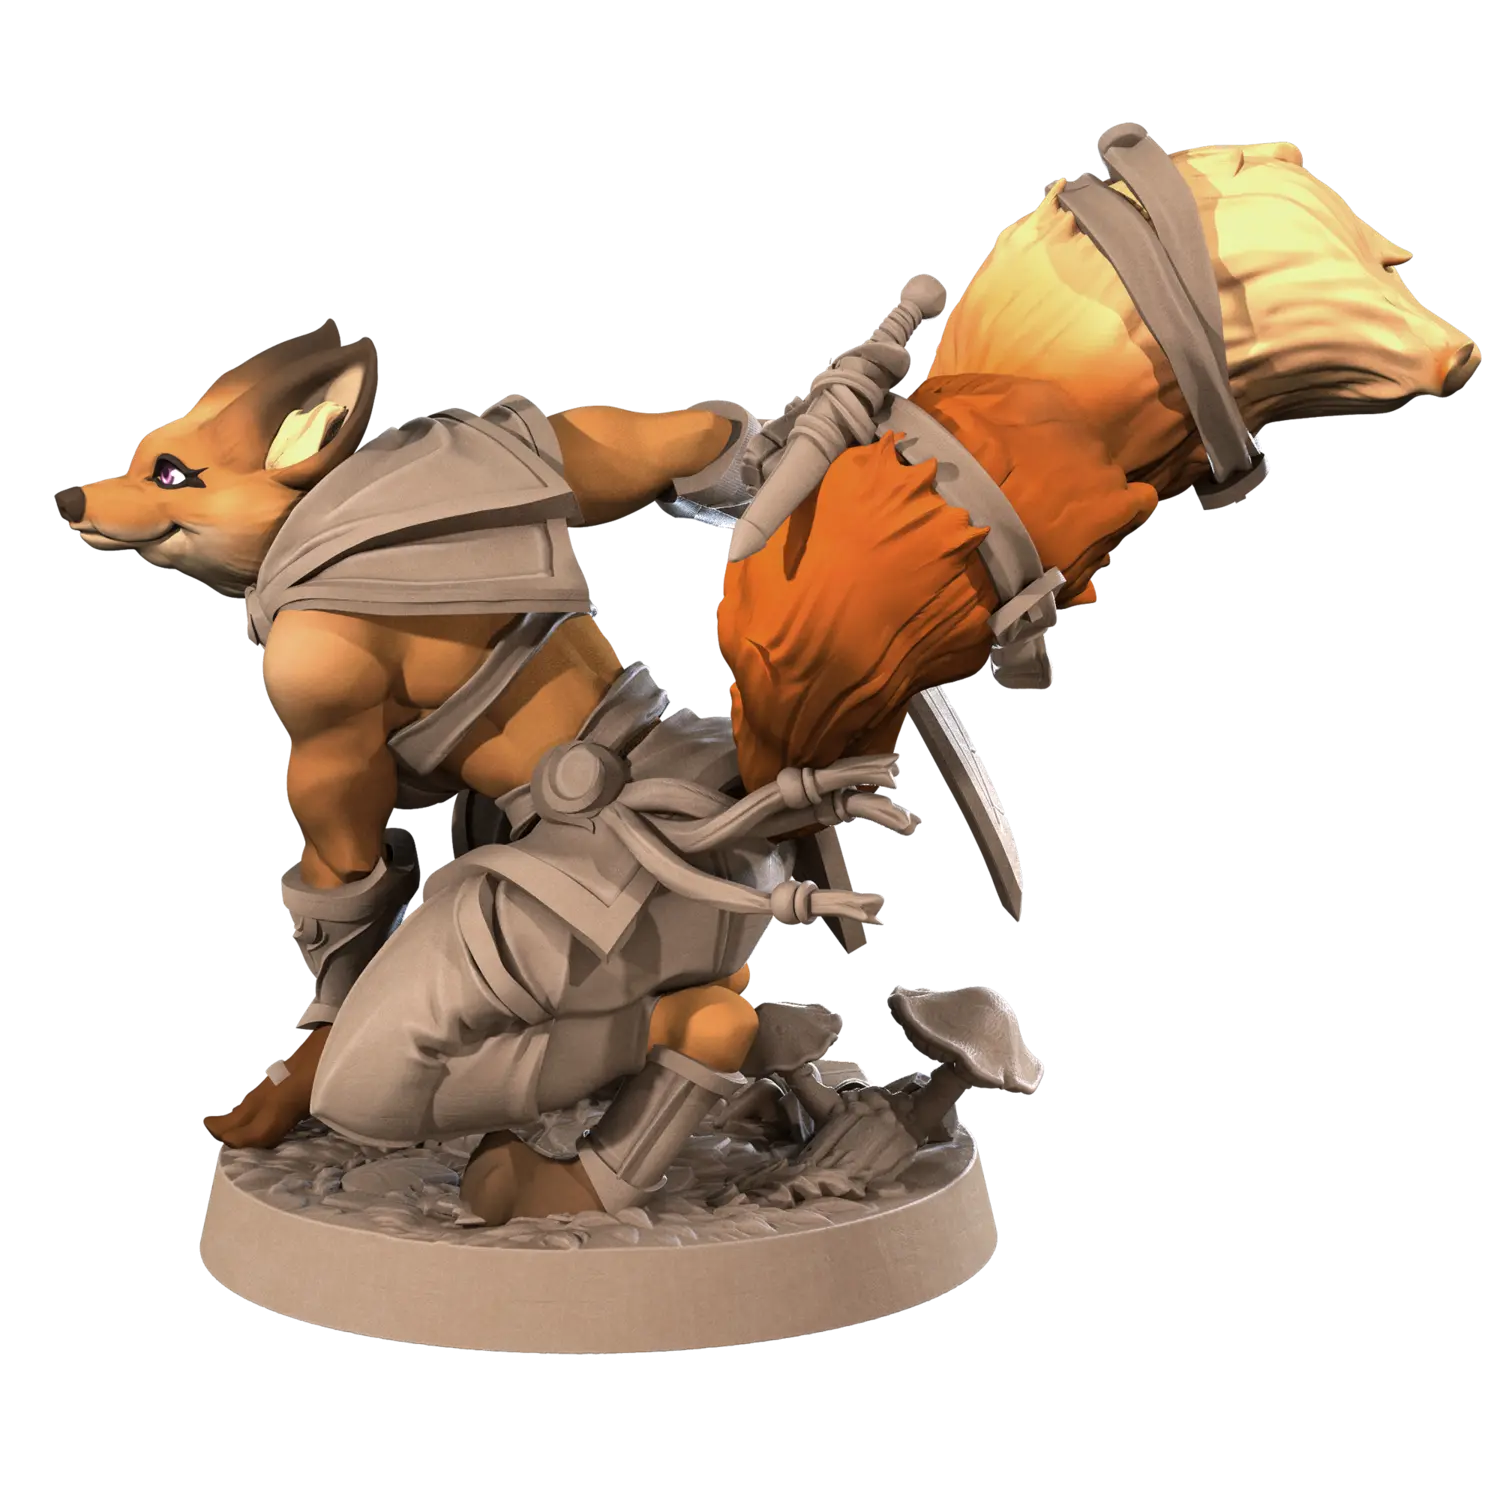 DnD Foxfolks - Miniature - Rogue Magnessa  Foxfolks - Miniature - Rogue sold by DoubleHitShop